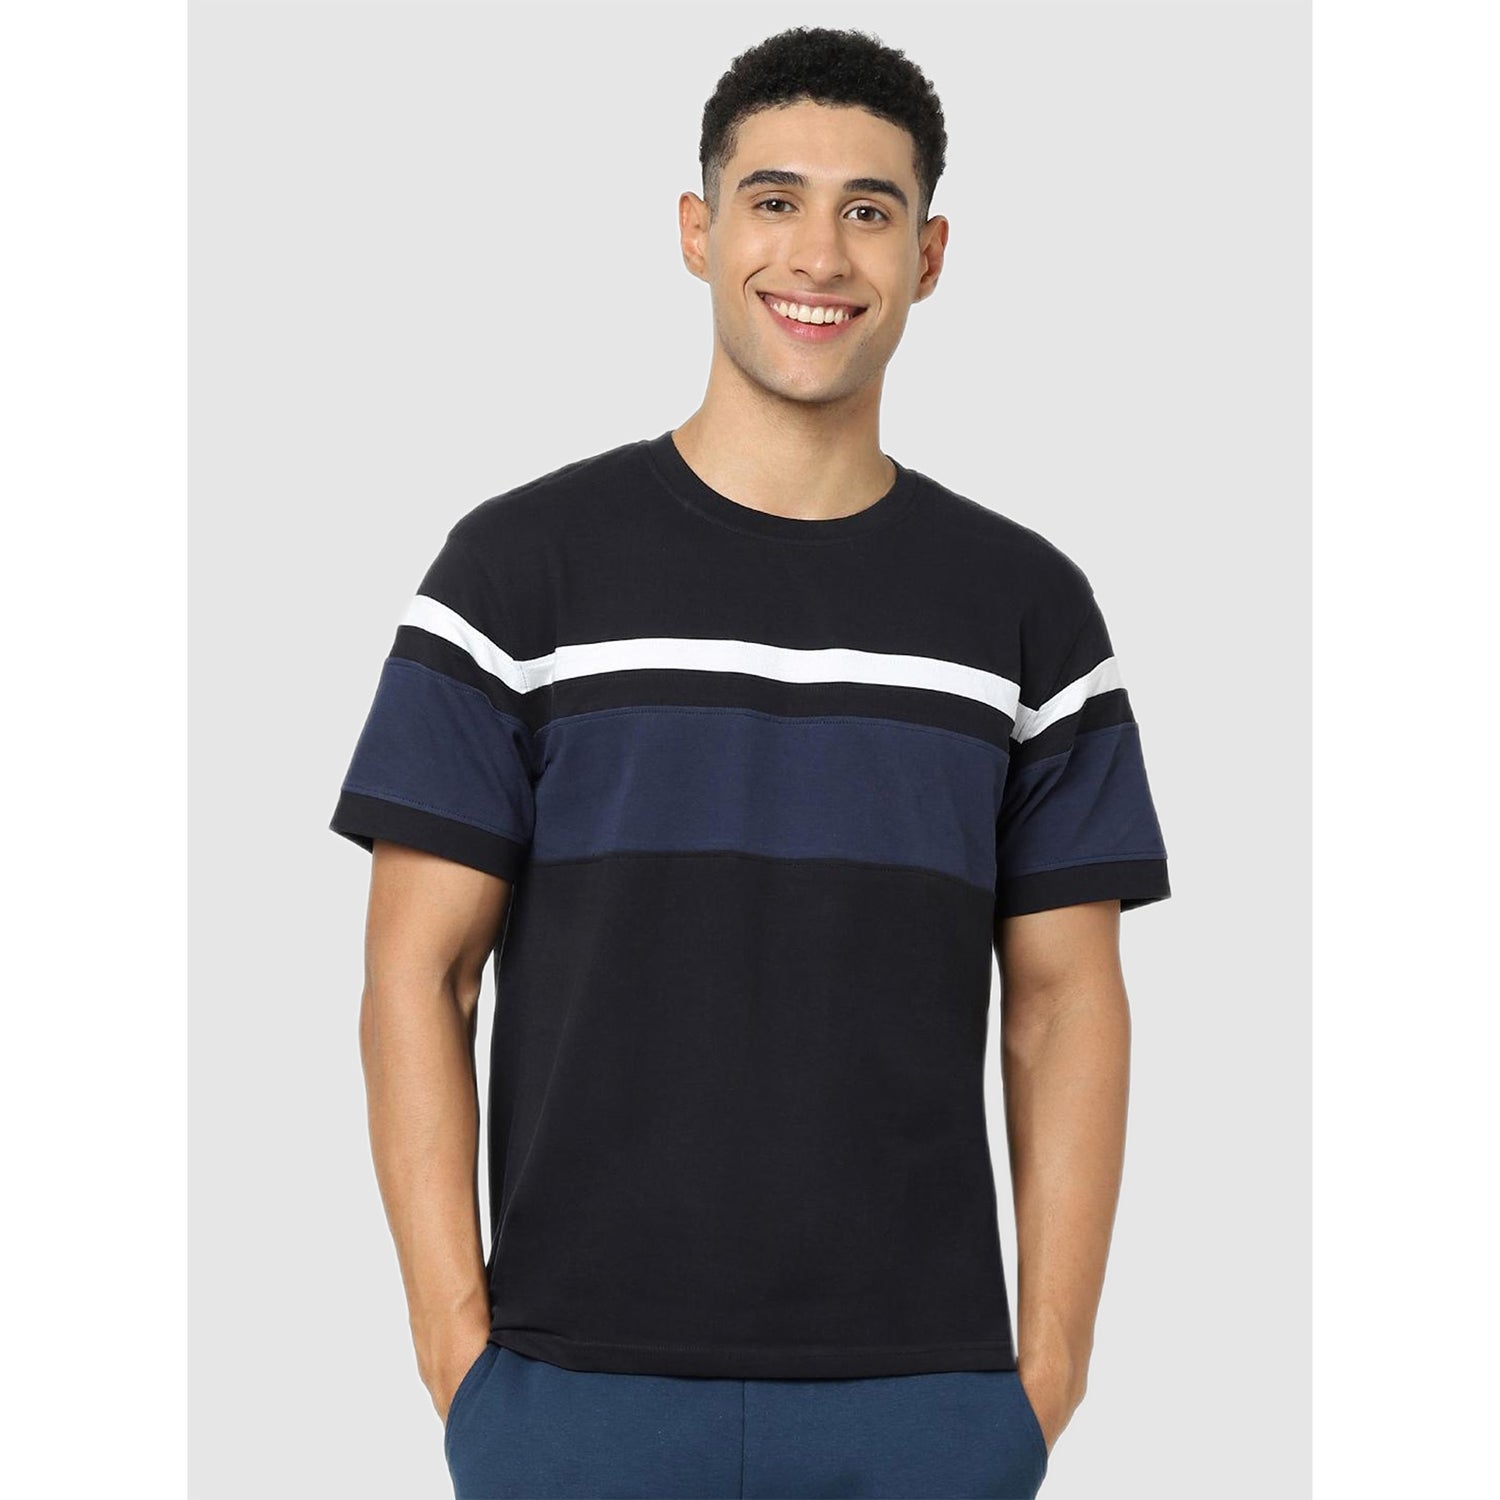 Black Color Regular Fit Block T-Shirt (Various Sizes)